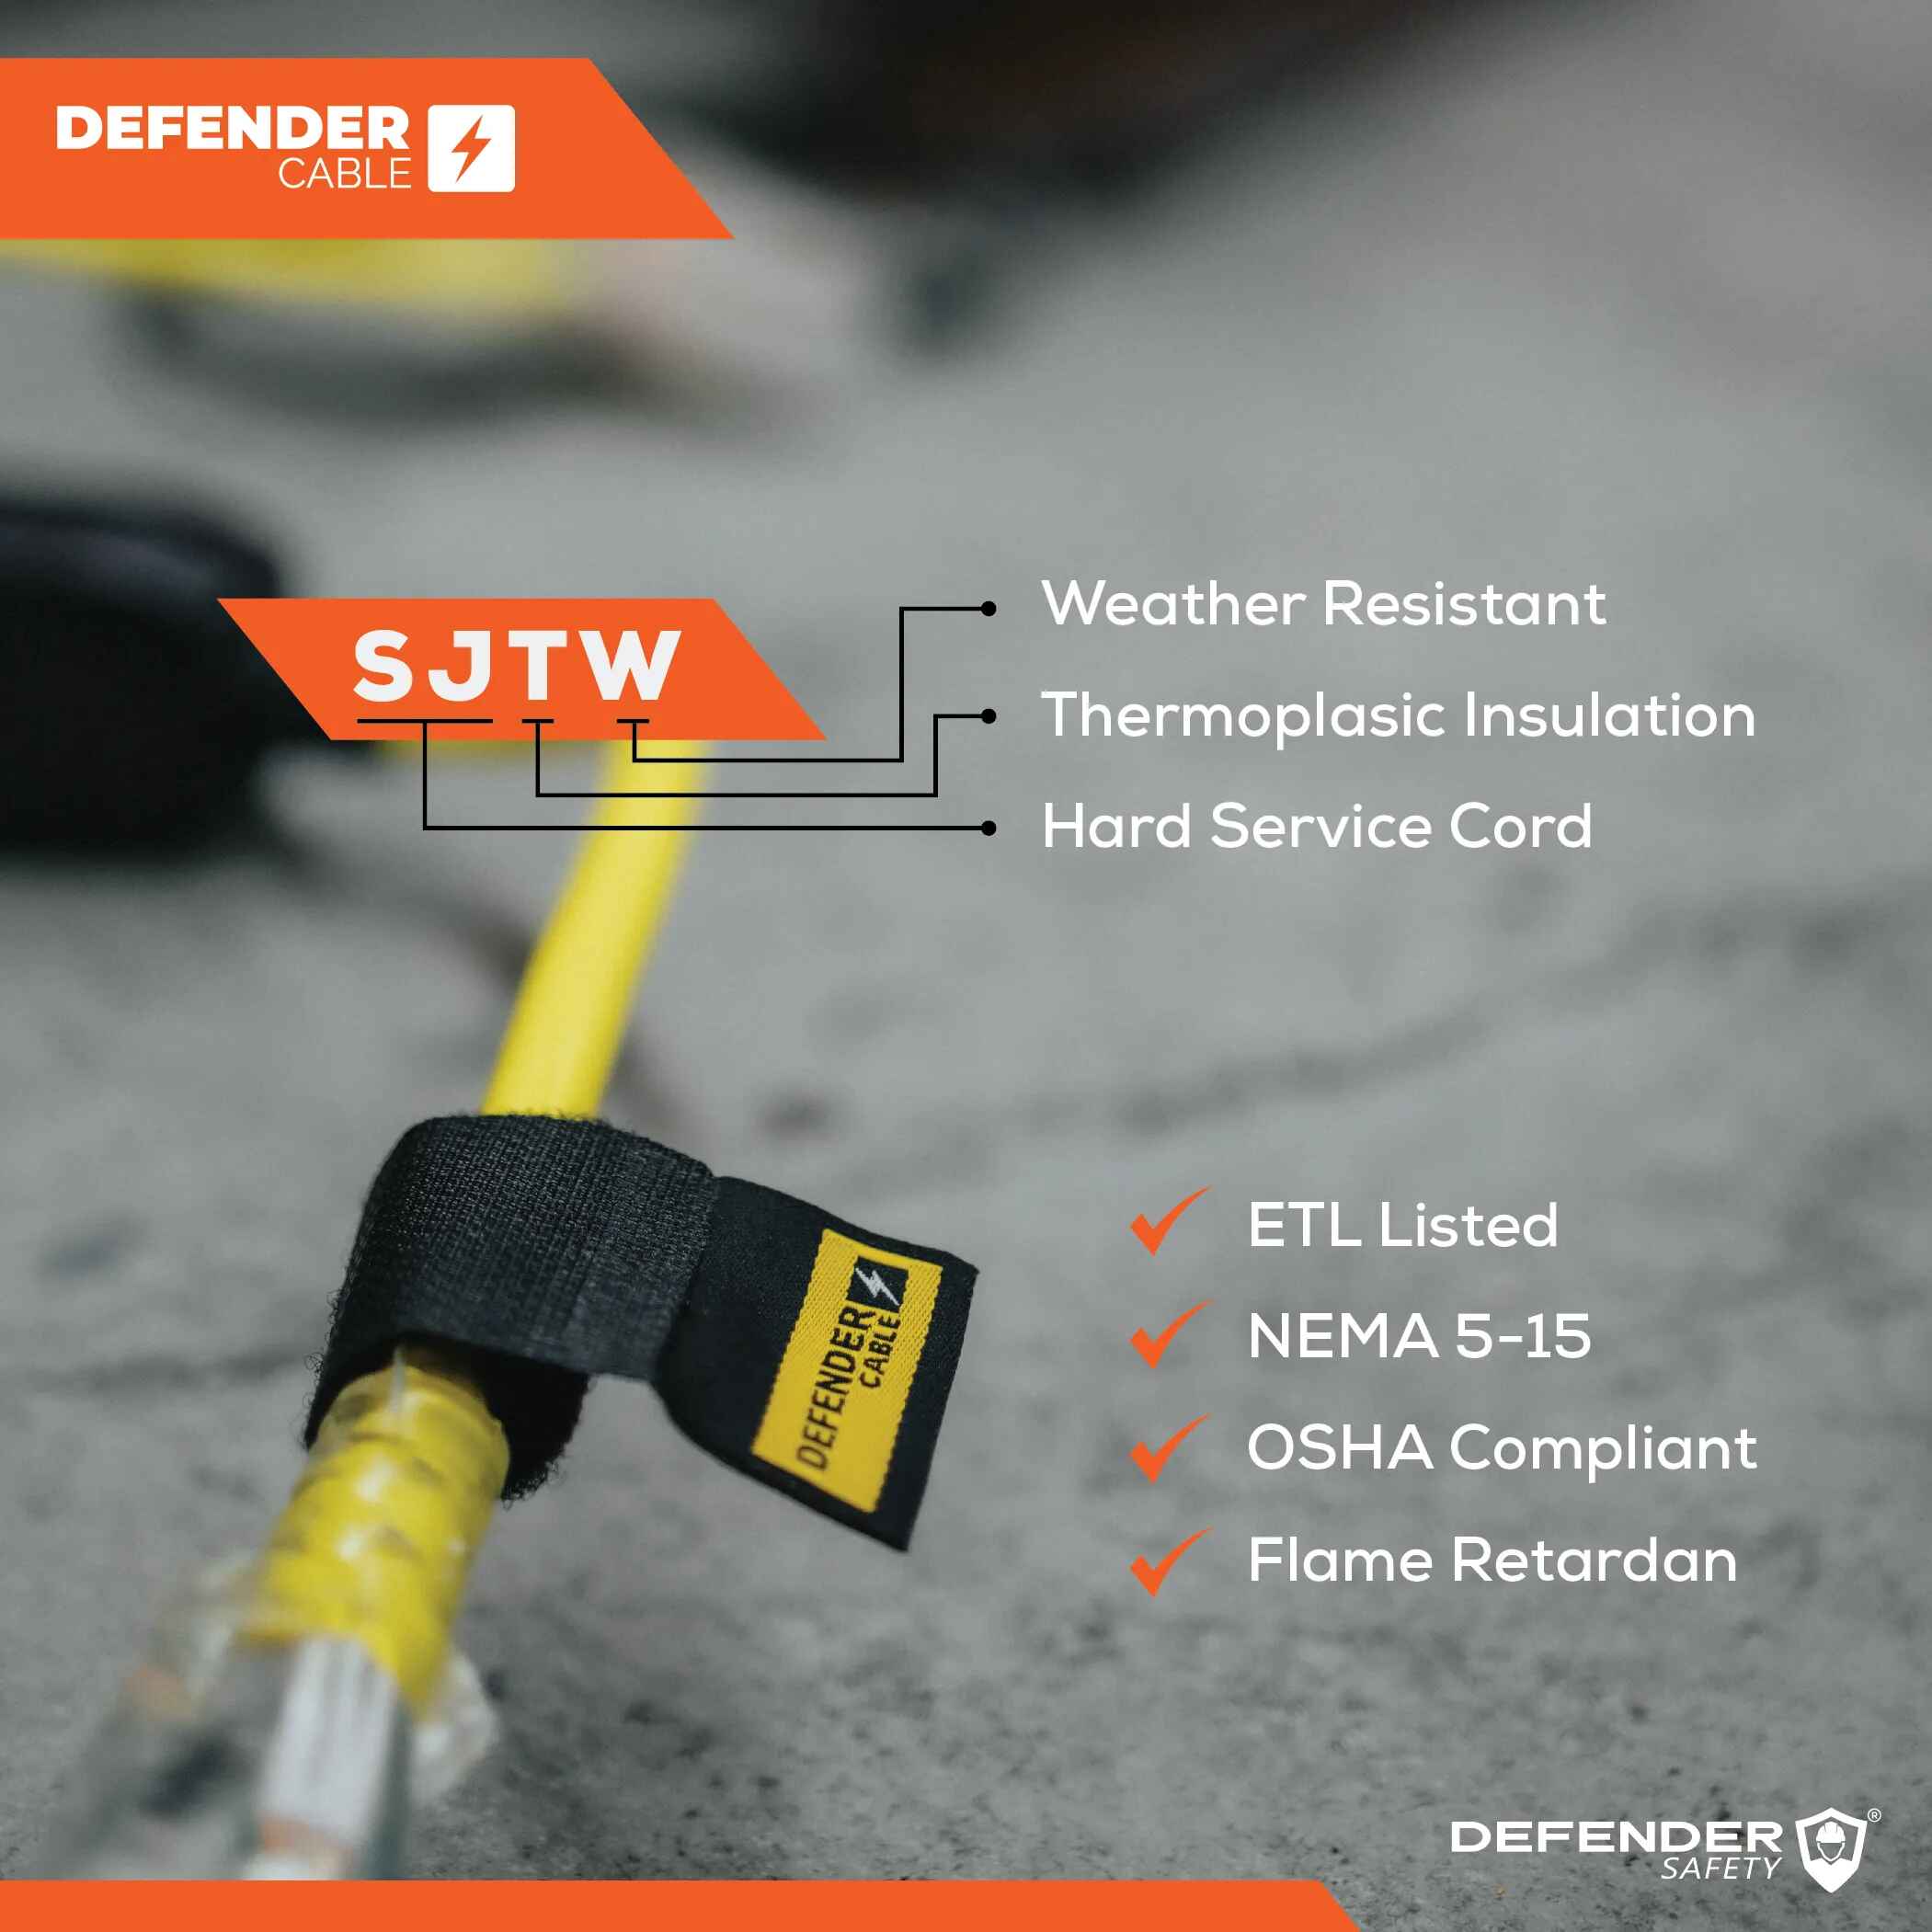 12/3 Gauge, 25 ft SJTW POWERBLOCK w/ Lighted End. Extension Cord, UL/ETL Listed - Defender Safety